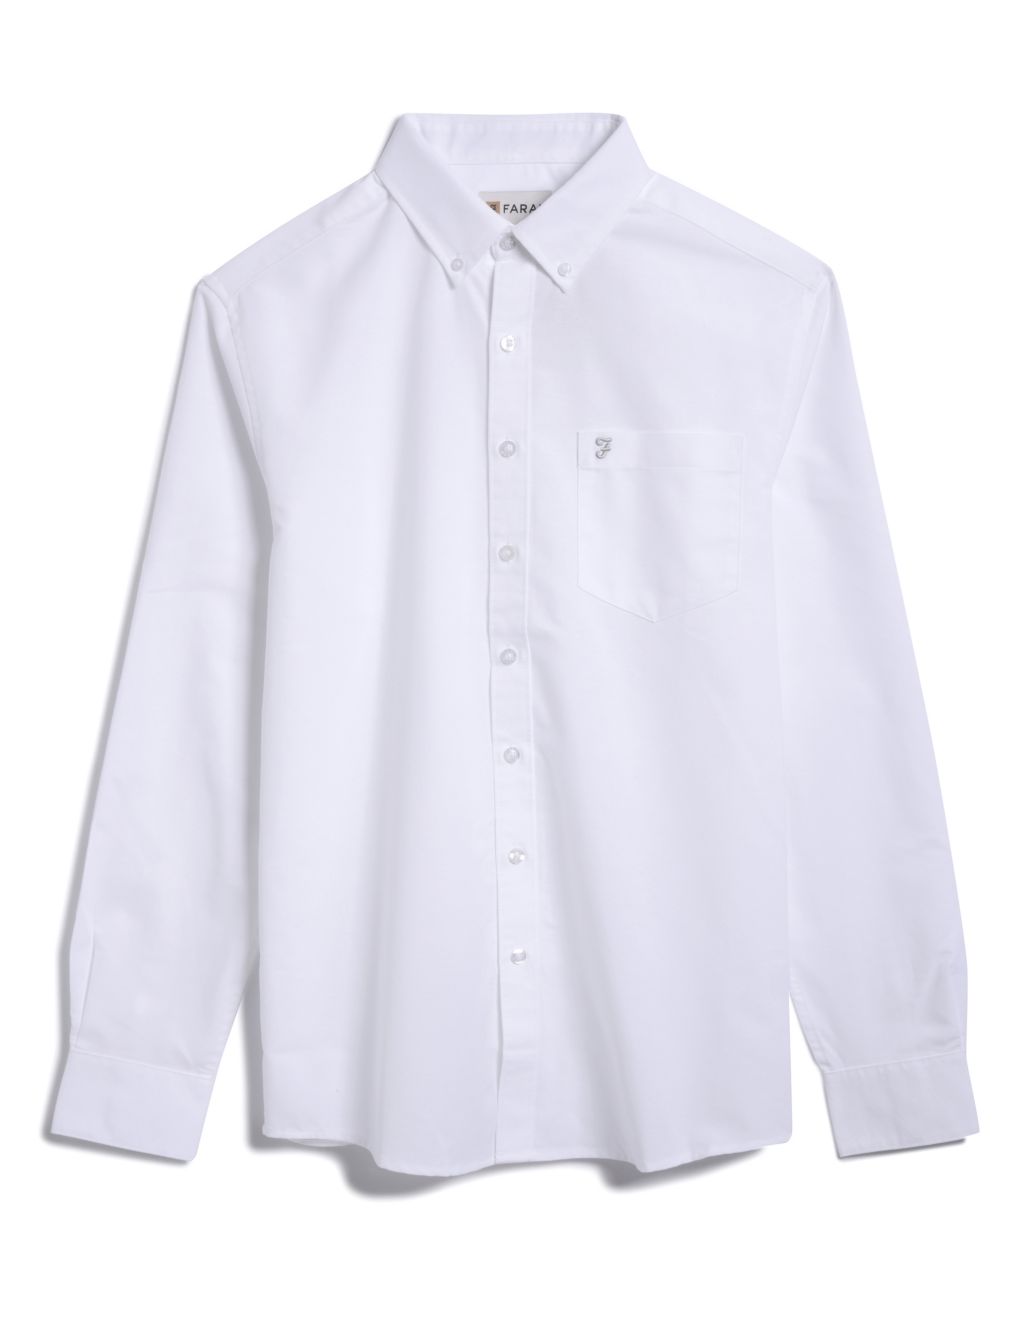 Cotton Blend Oxford Shirt image 2